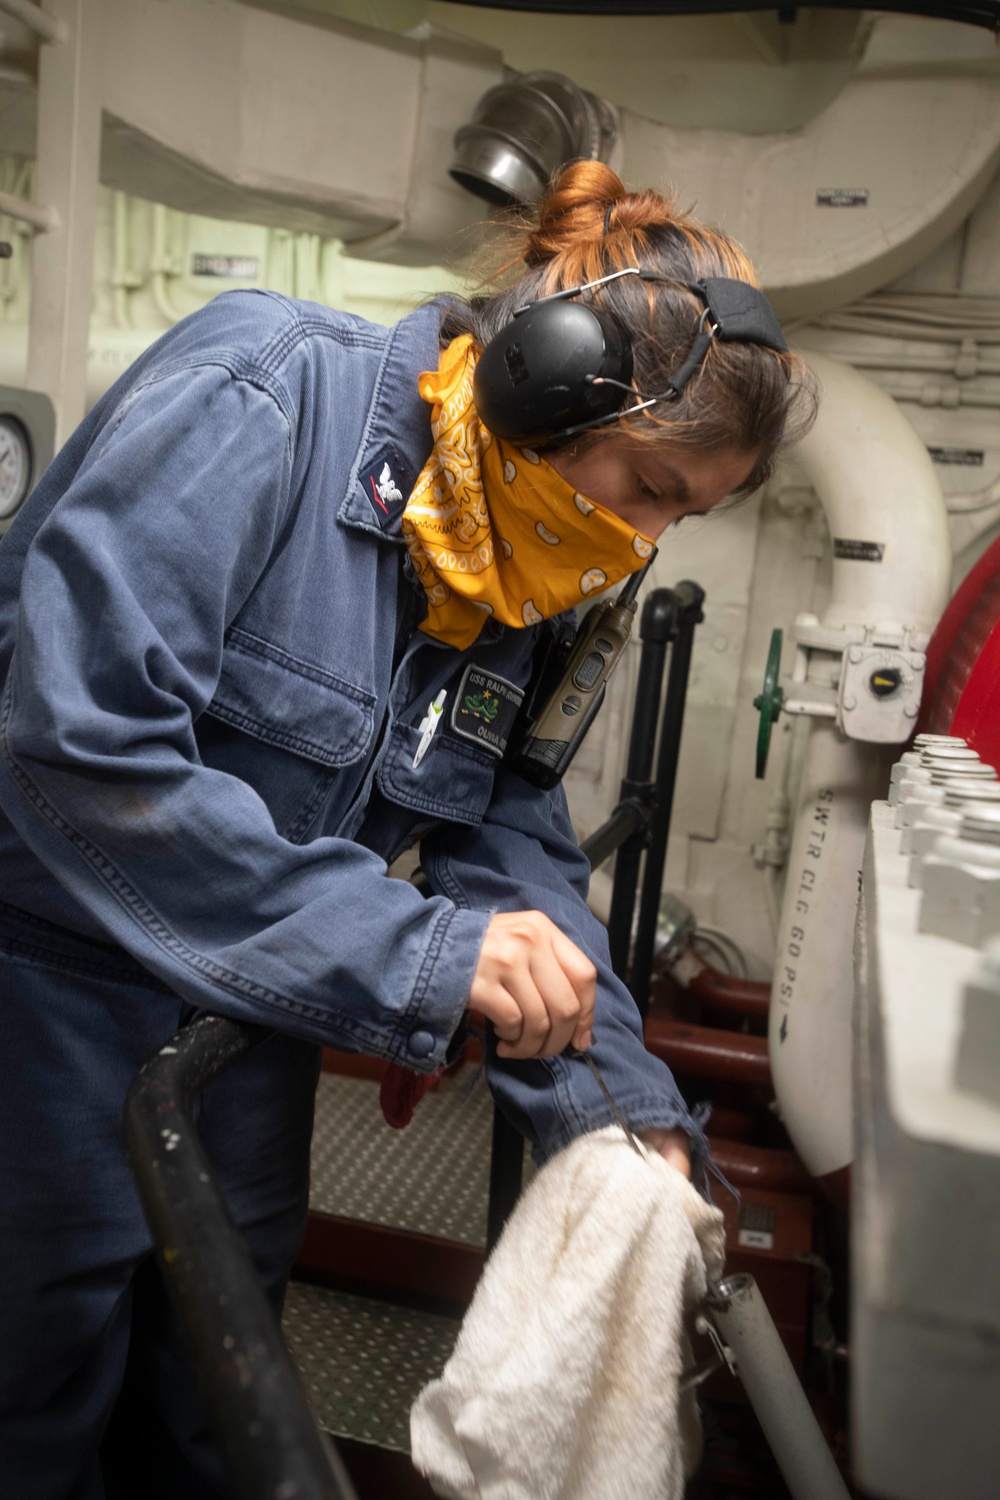 Damage Controlman Works aboard USS Ralph Johnson